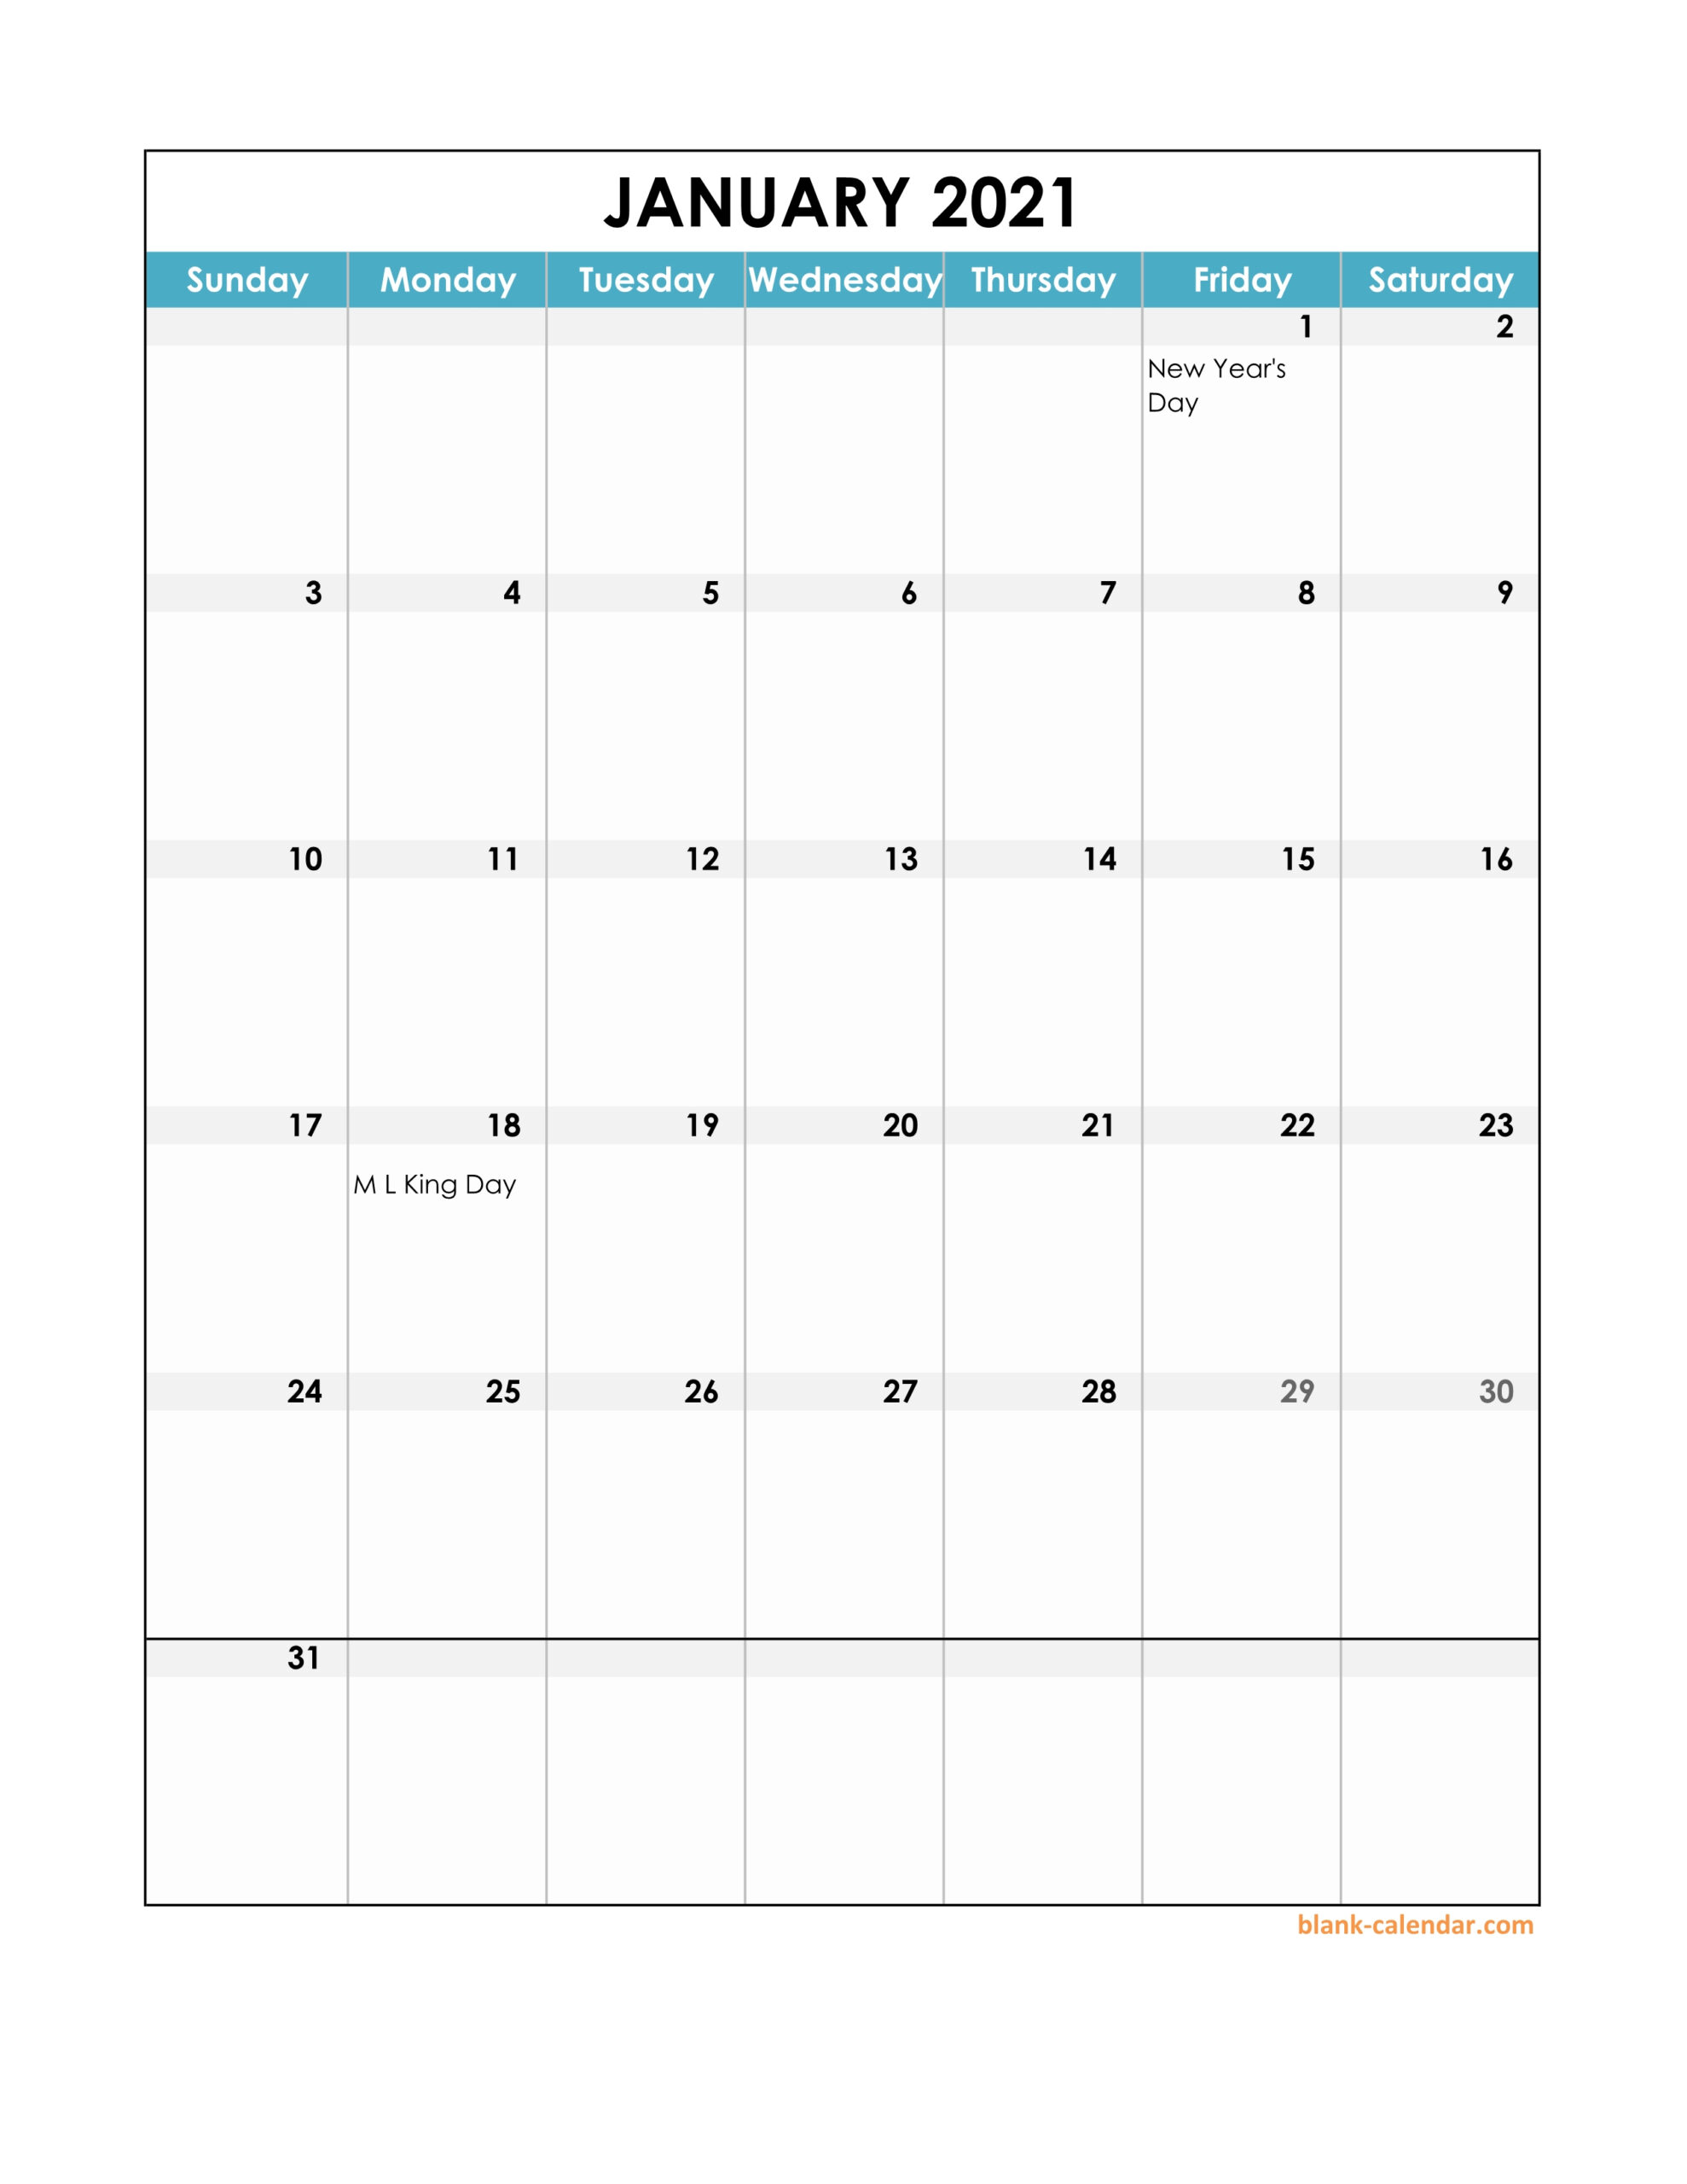 2021 Excel Calendar Planner 12 | Empty Calendar regarding Free Printable Calendars 2021 With Lines